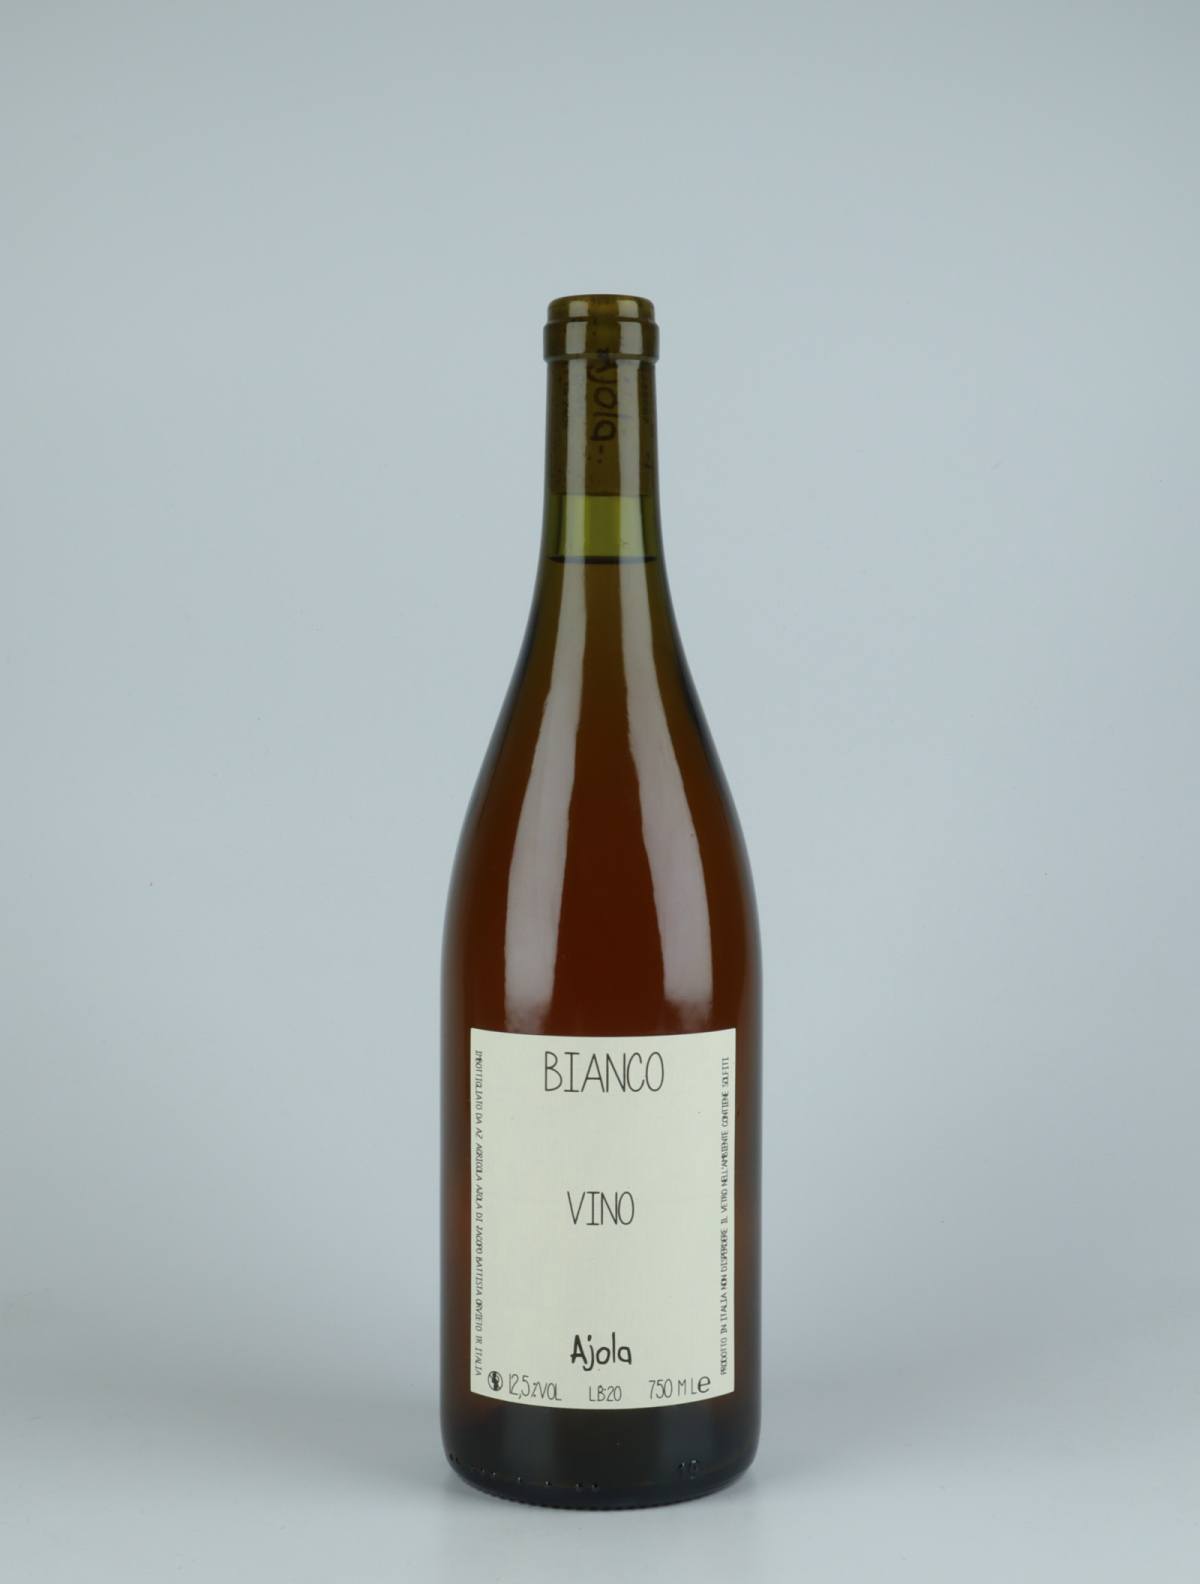 En flaske 2020 Vino Bianco Orange vin fra Ajola, Umbrien i Italien